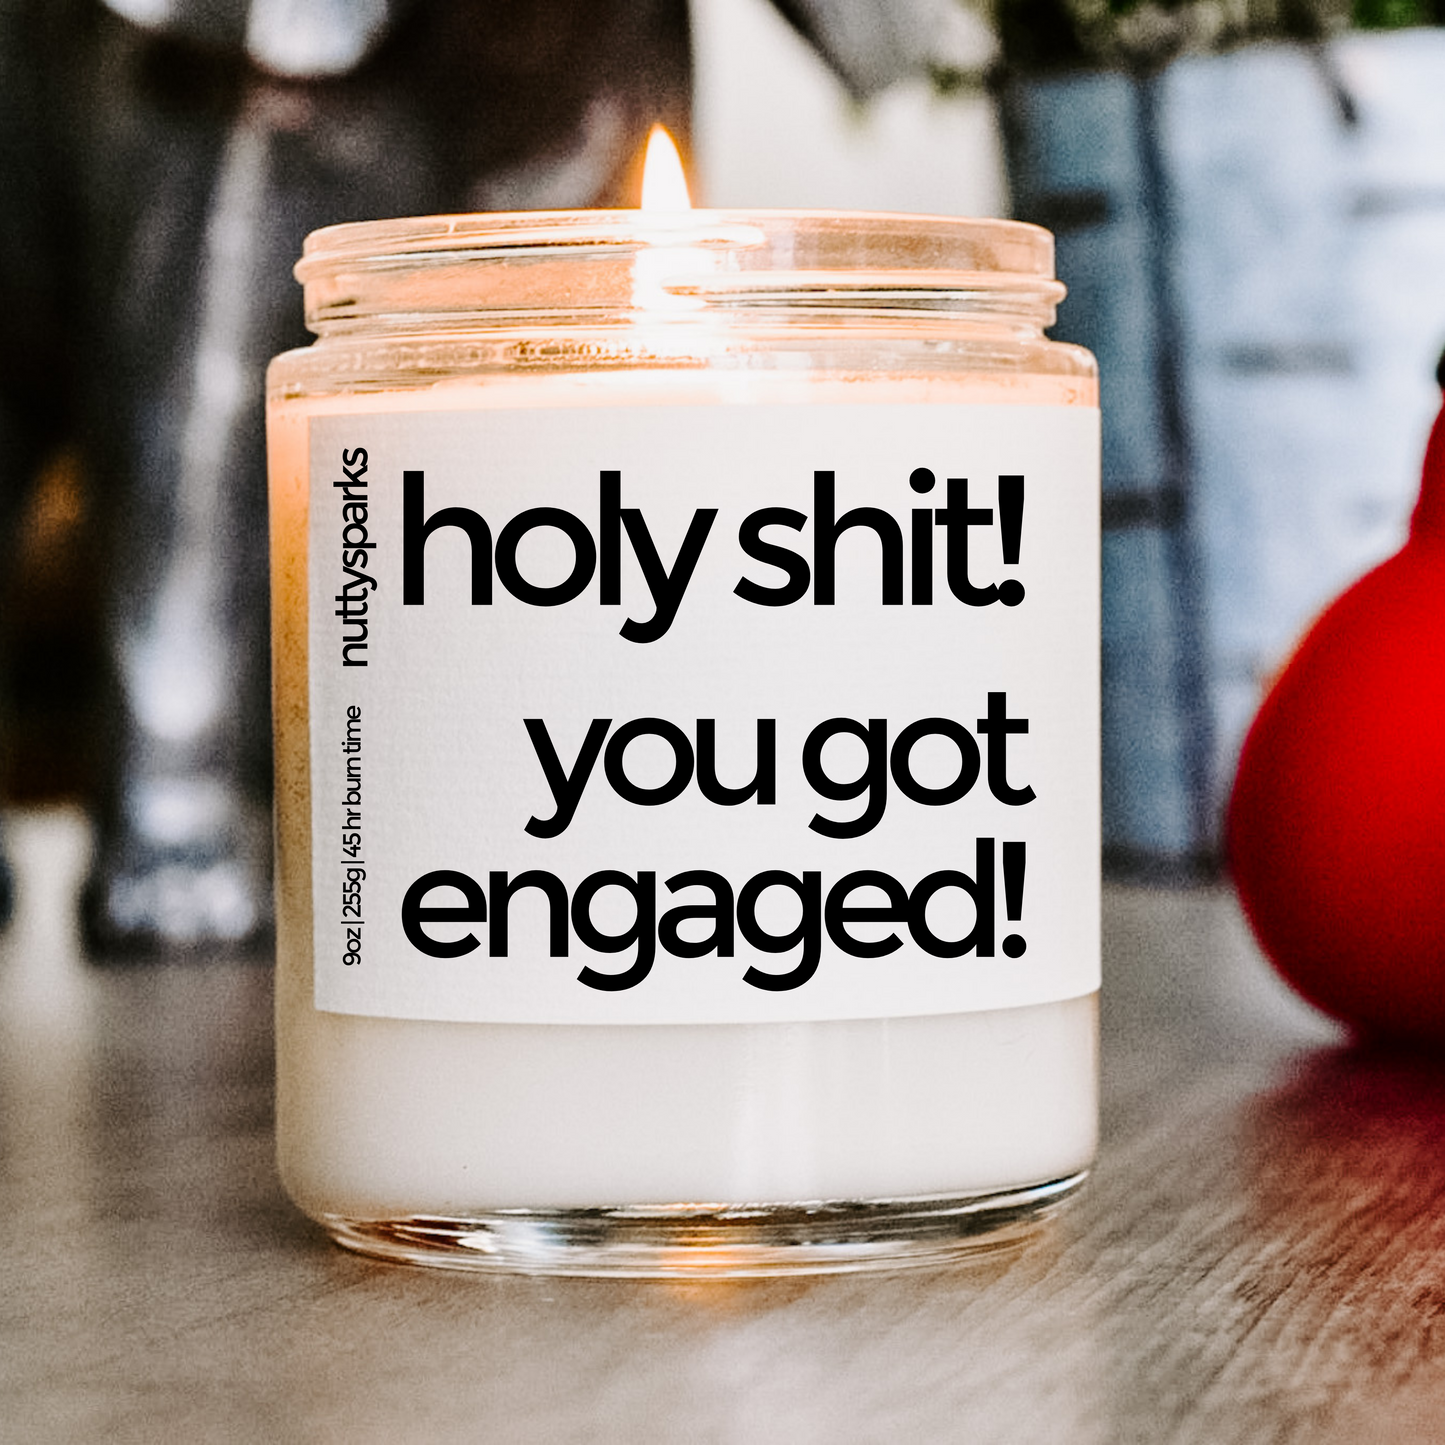 holy shit you got engaged